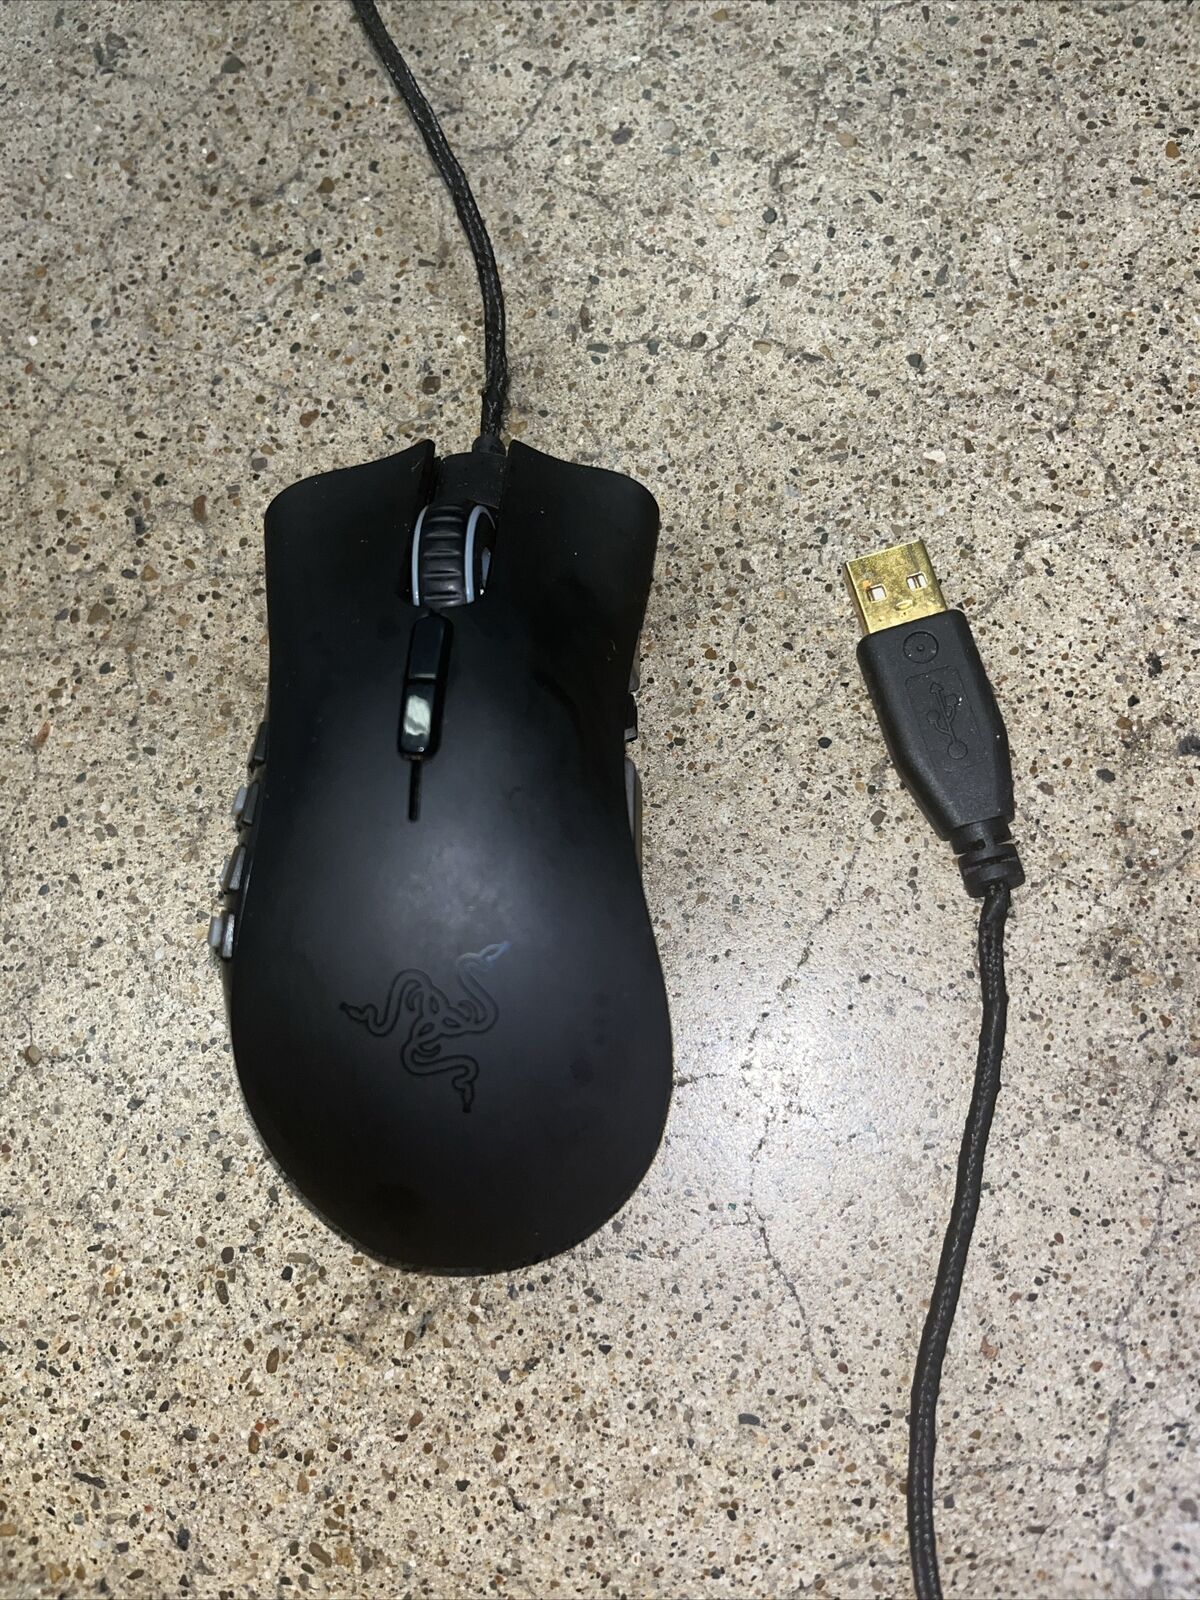 Razer Naga Epic Gaming Mouse RC30-005101 RZ01-00510100 Laser USB MMO No Receiver